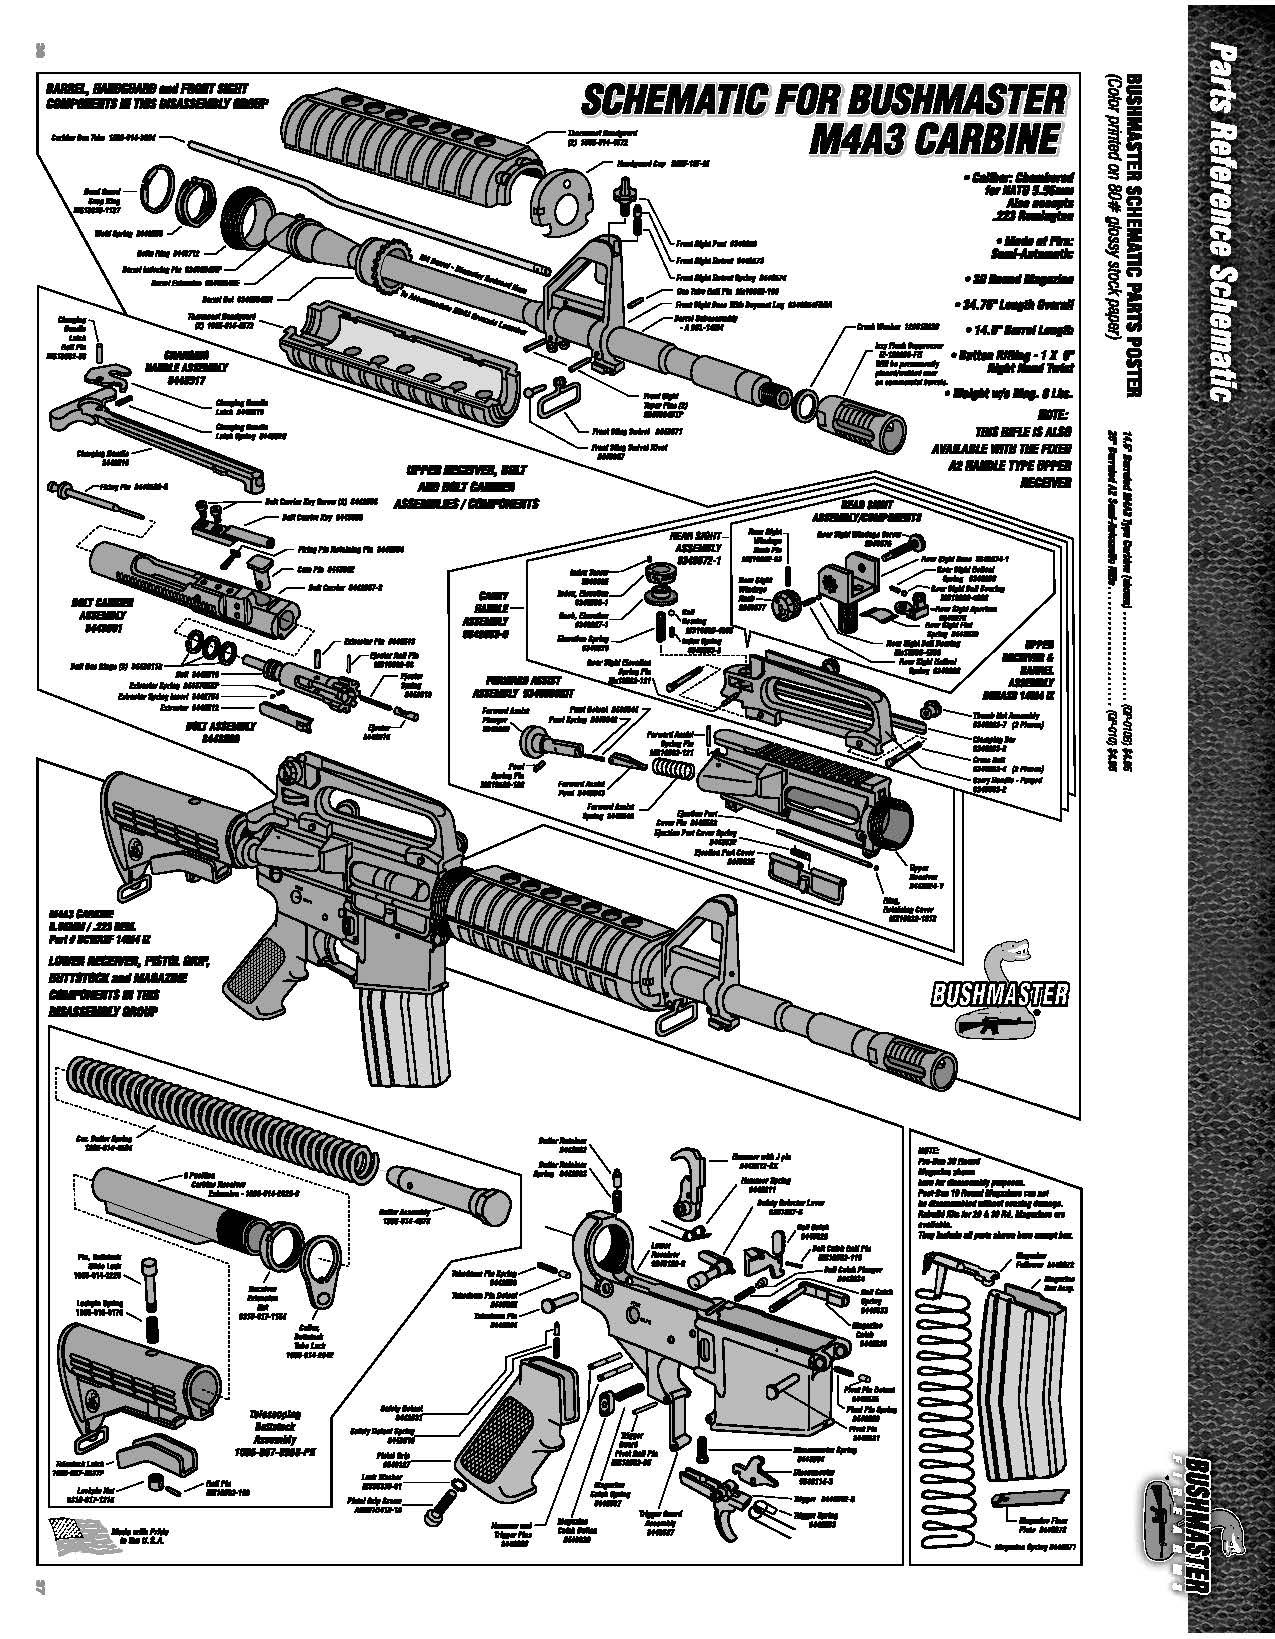 Bushmaster Manual M4